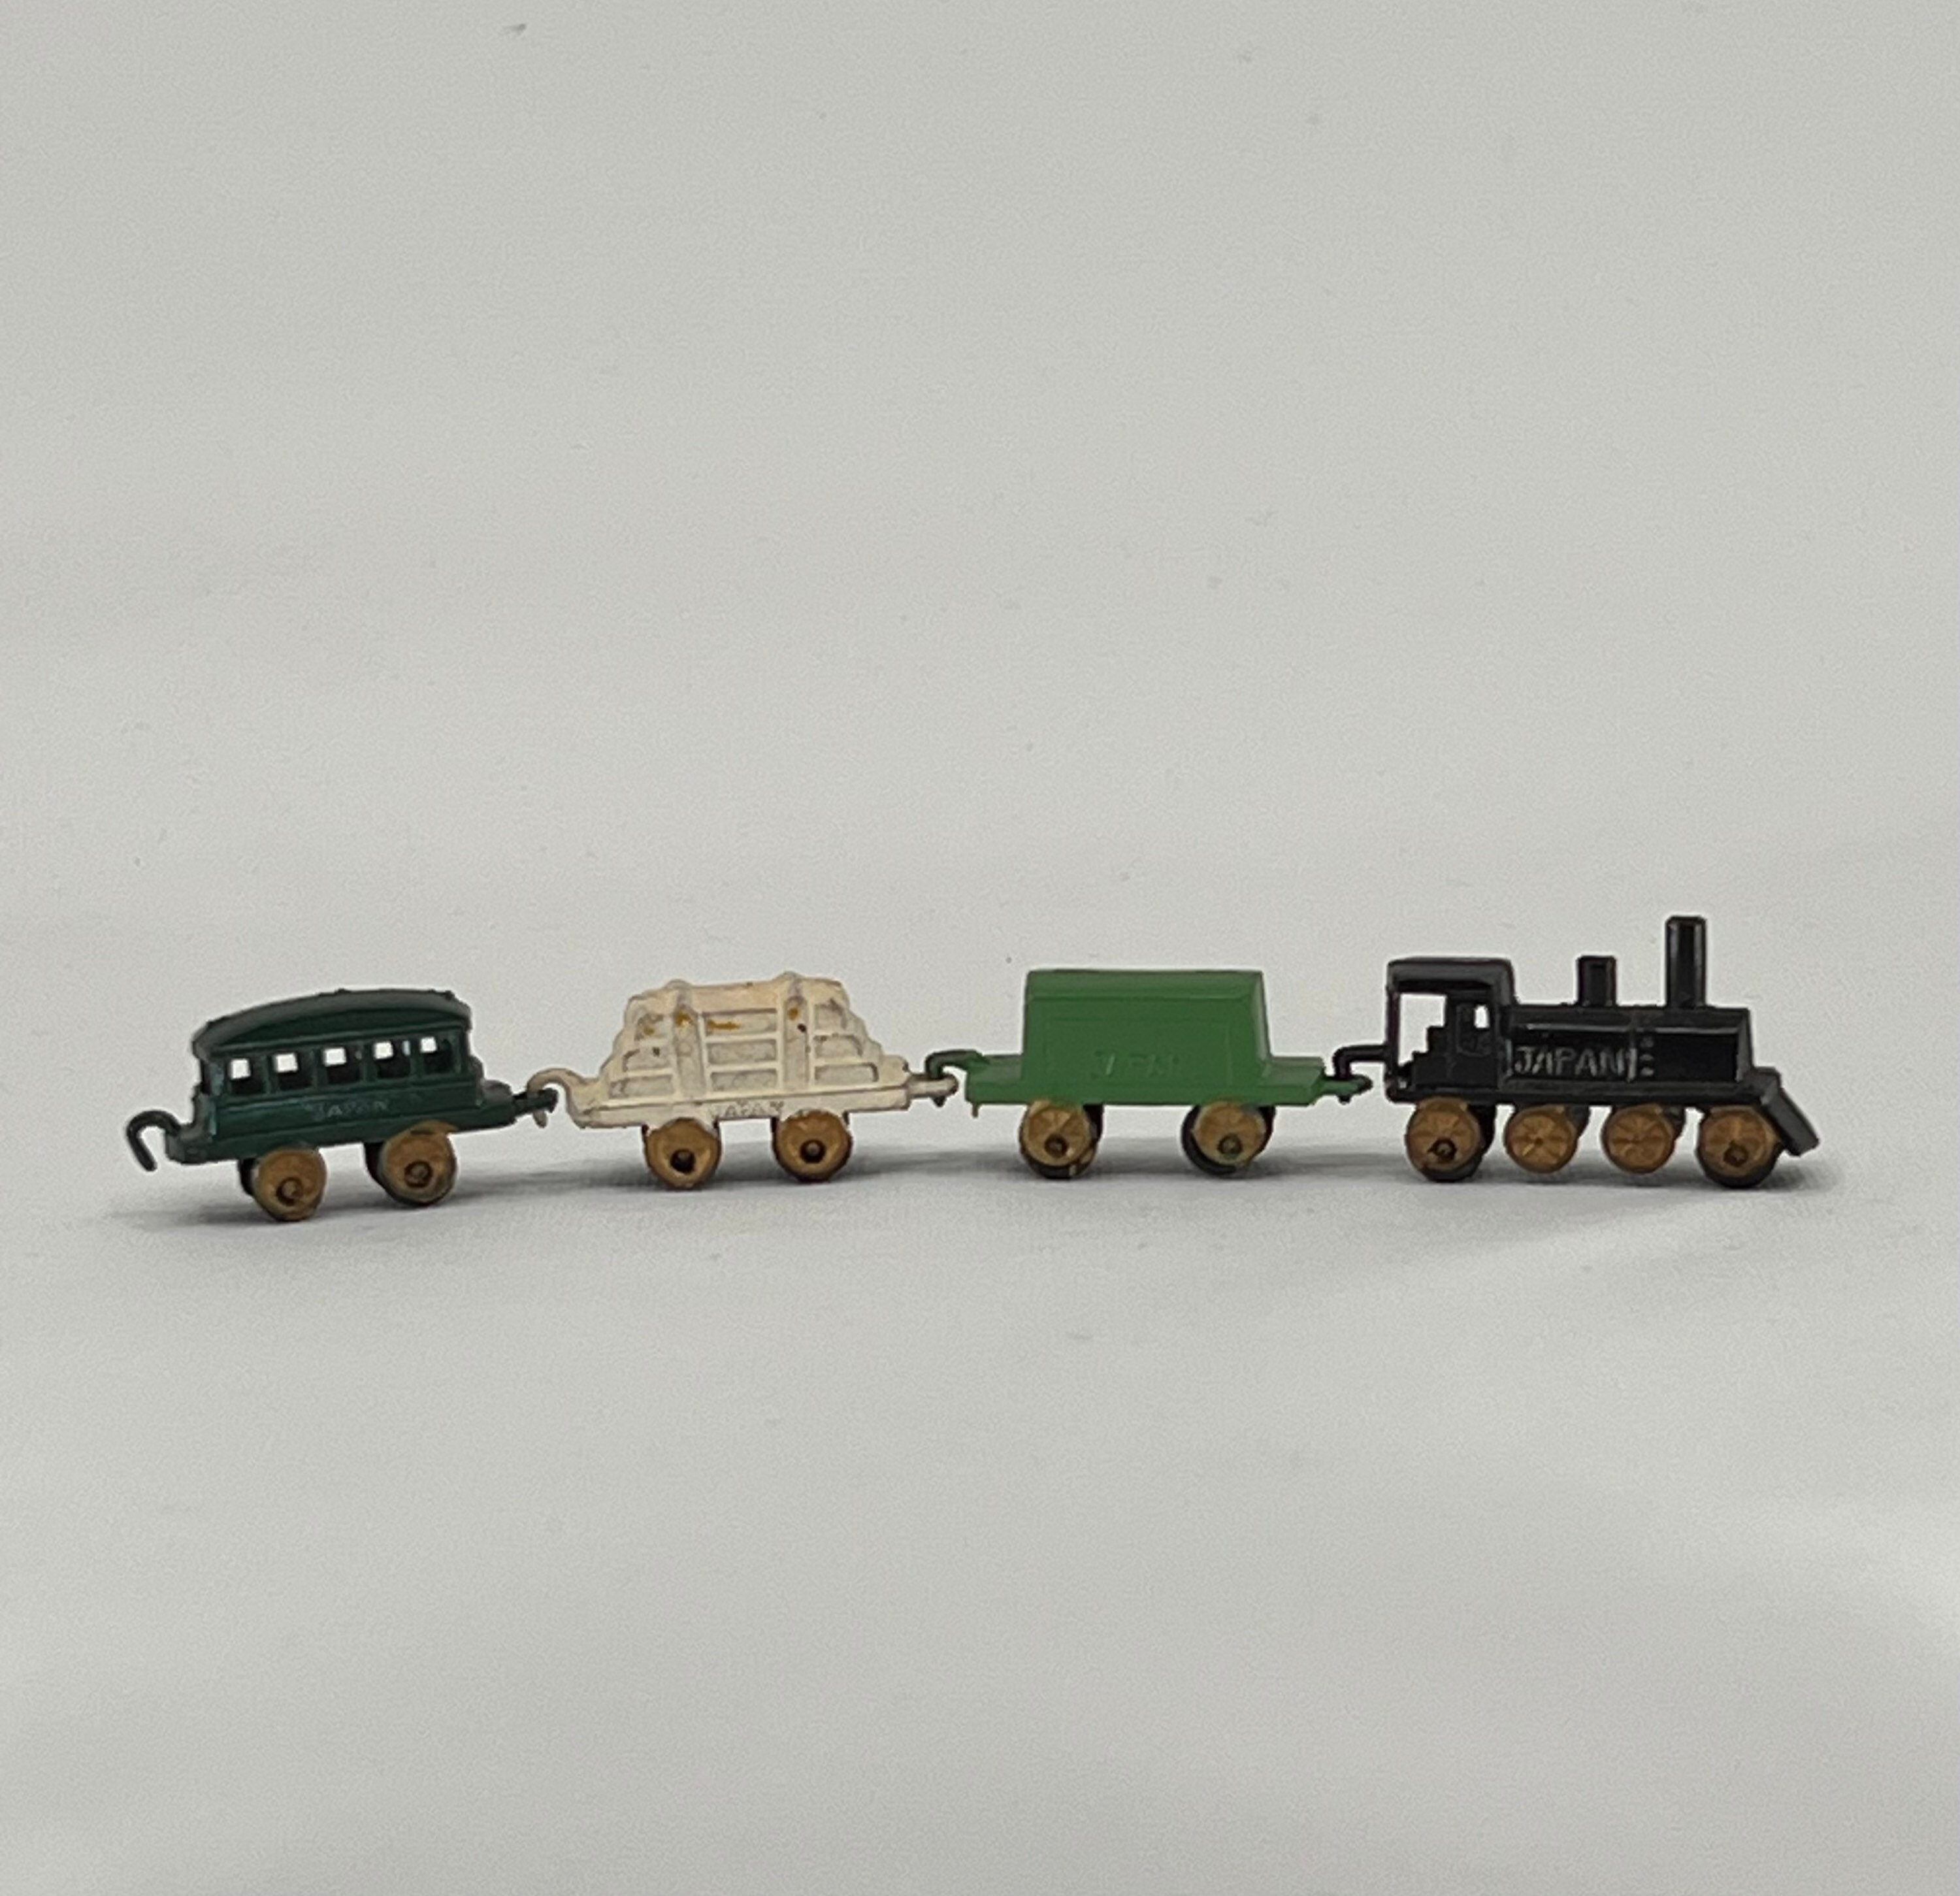 Lead free pewter ore train car figurine A1025 